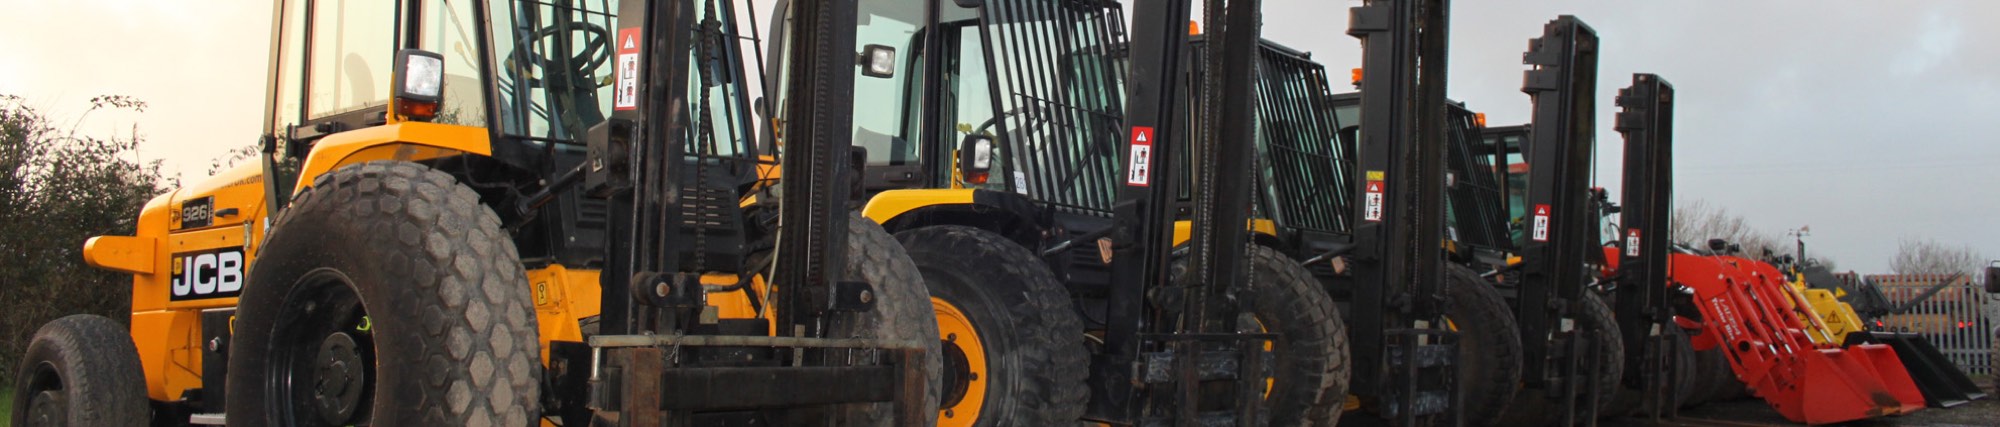 Hopkins Machinery Tractor, Groundcare Equipment Hire Groundcare, Tractor, Equipment Hire, UK, Hopkins Machinery, Wales, Devon